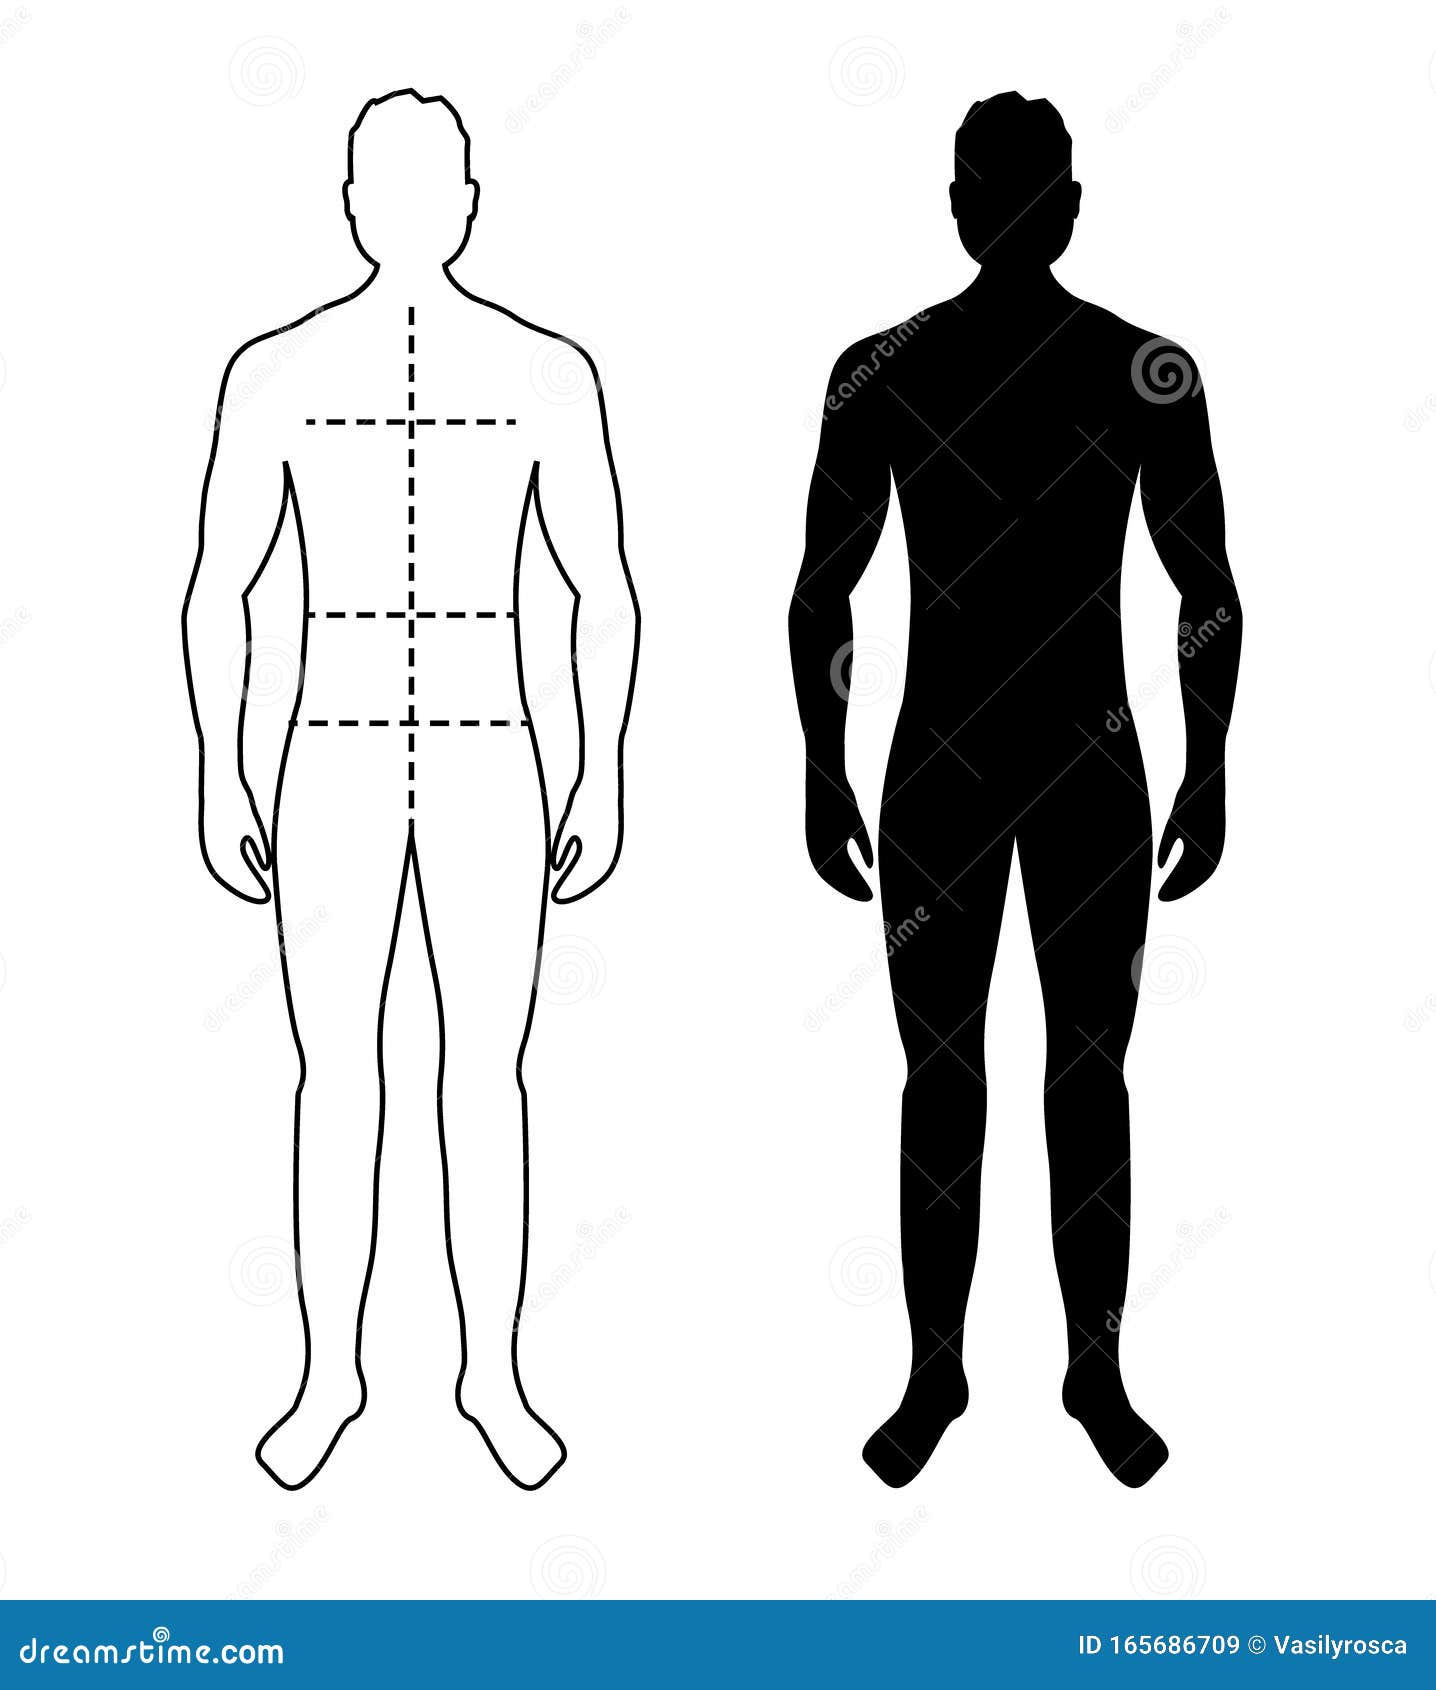 https://thumbs.dreamstime.com/z/man-anatomy-silhouette-size-human-body-full-measure-male-figure-waist-chest-chart-template-man-anatomy-silhouette-size-human-body-165686709.jpg